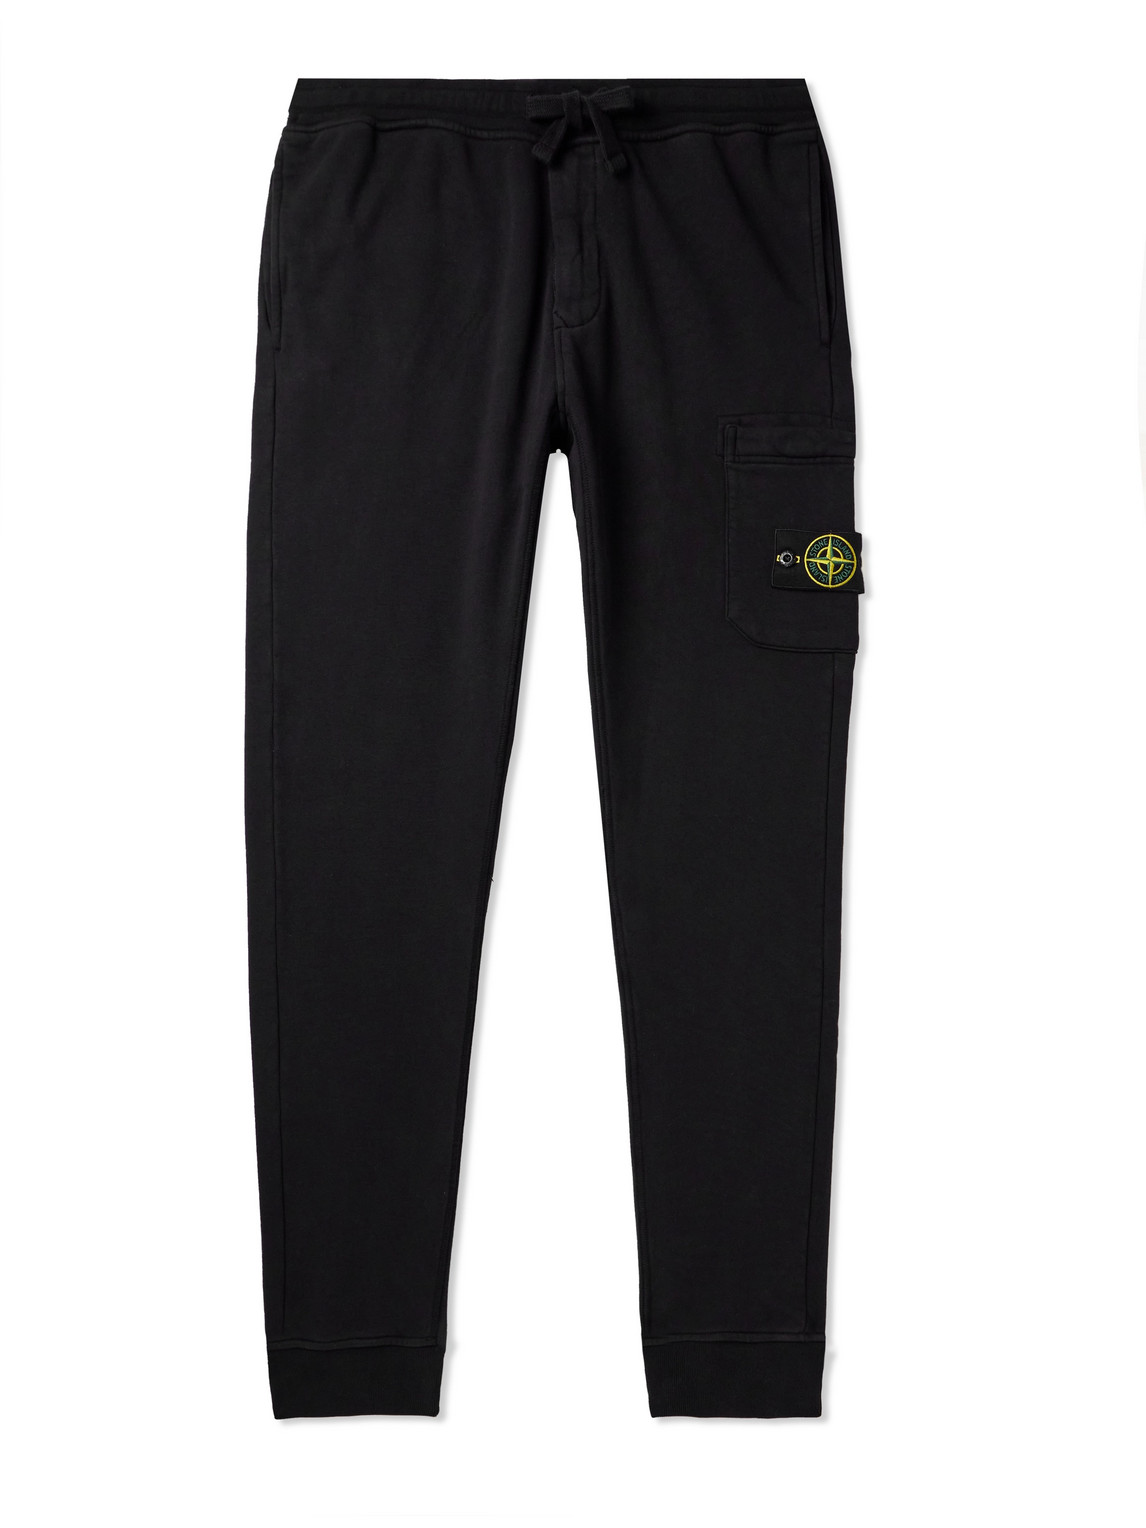 Stone Island - Tapered Logo-Appliquéd Garment-Dyed Cotton-Jersey Sweatpants - Men - Black - S von Stone Island